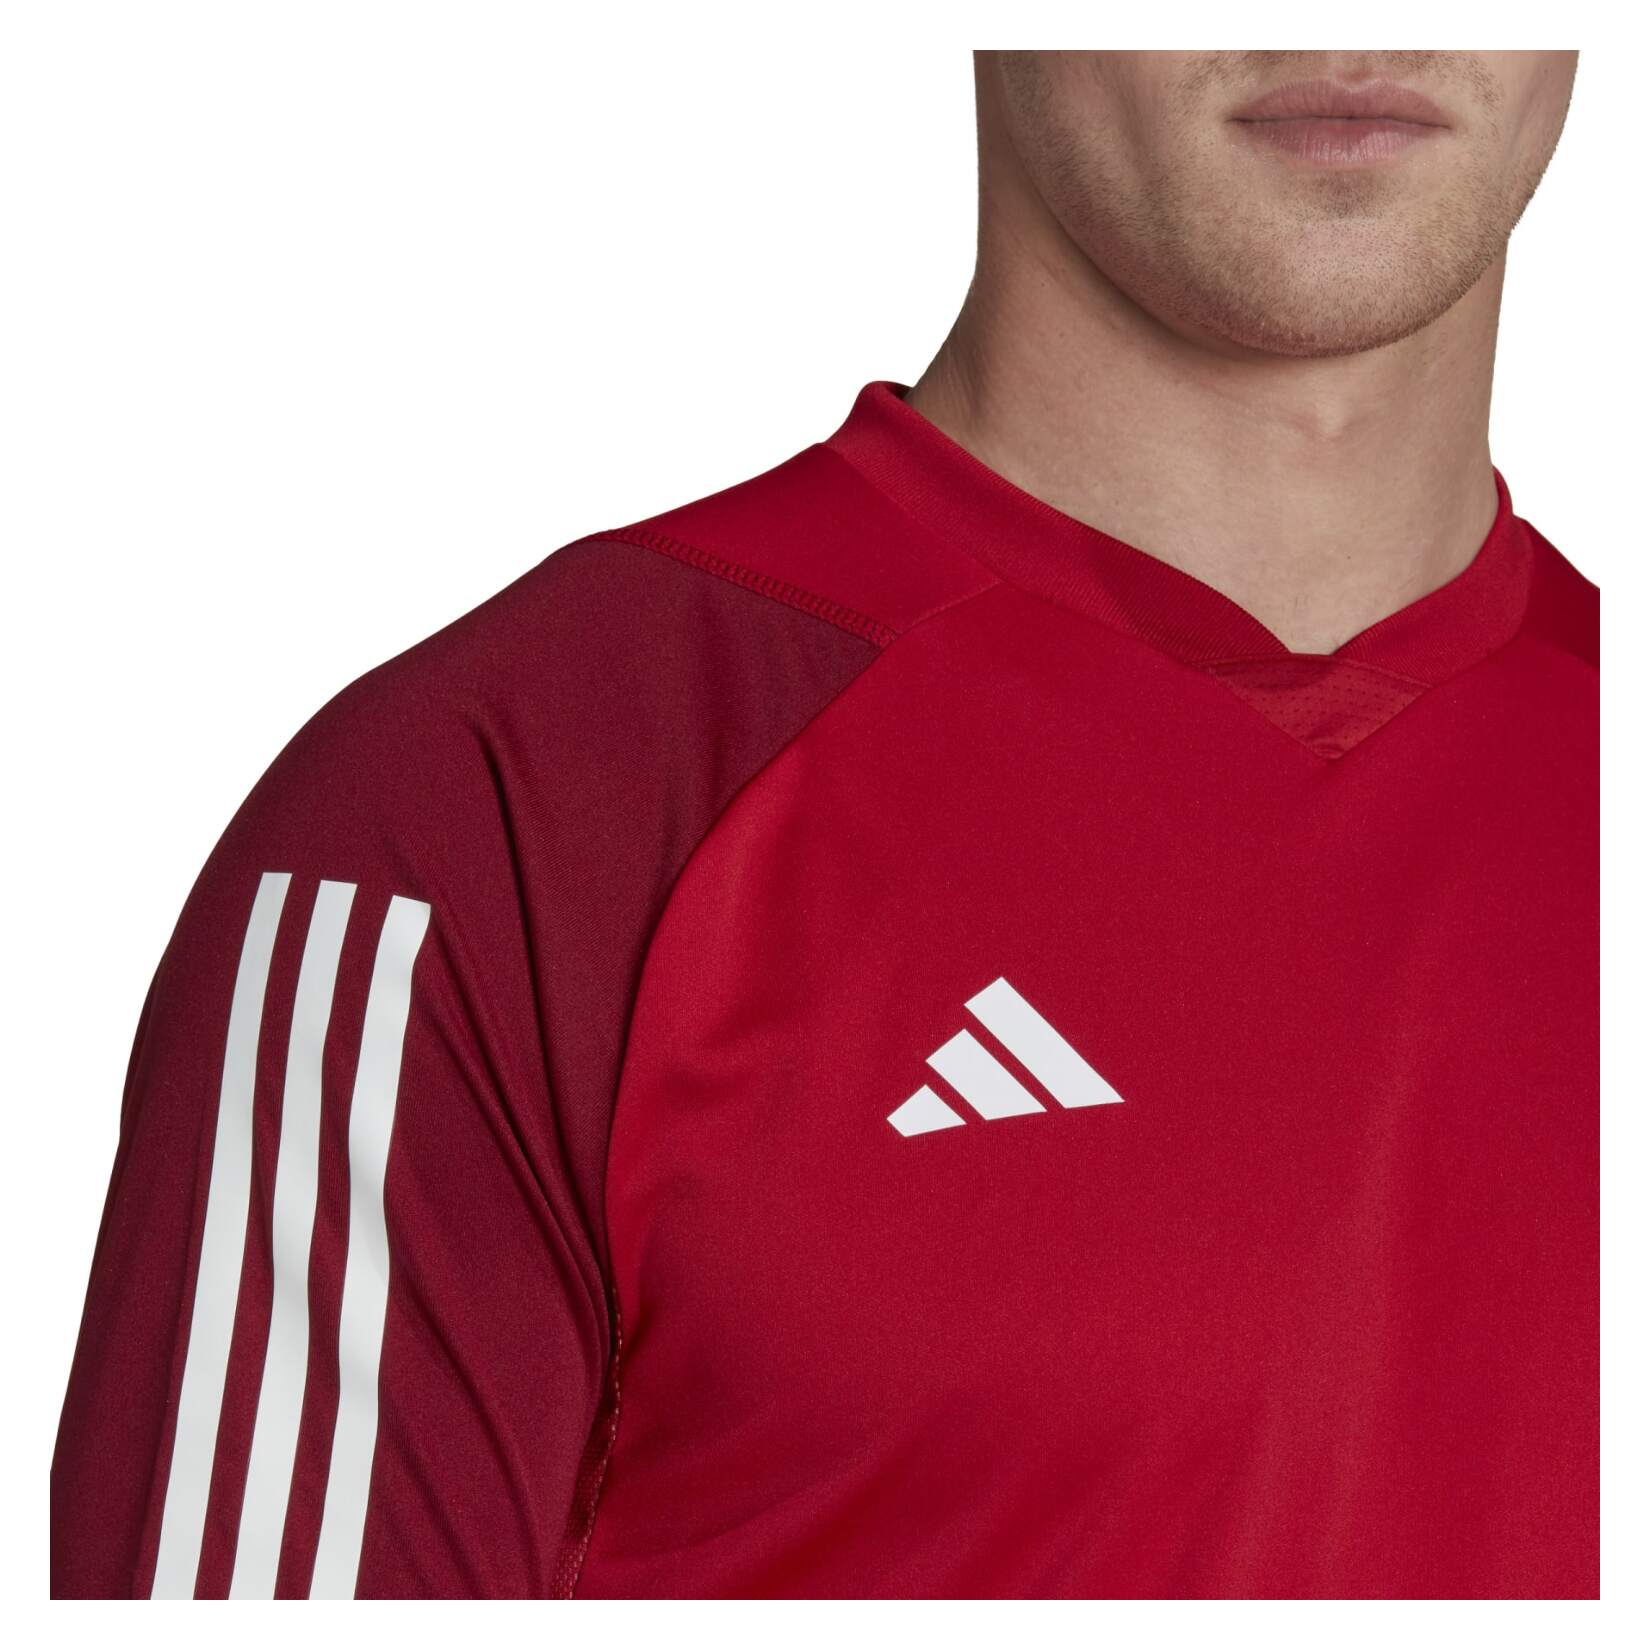 adidas Tiro 23 League Jersey - Grey | Men's Soccer | adidas US